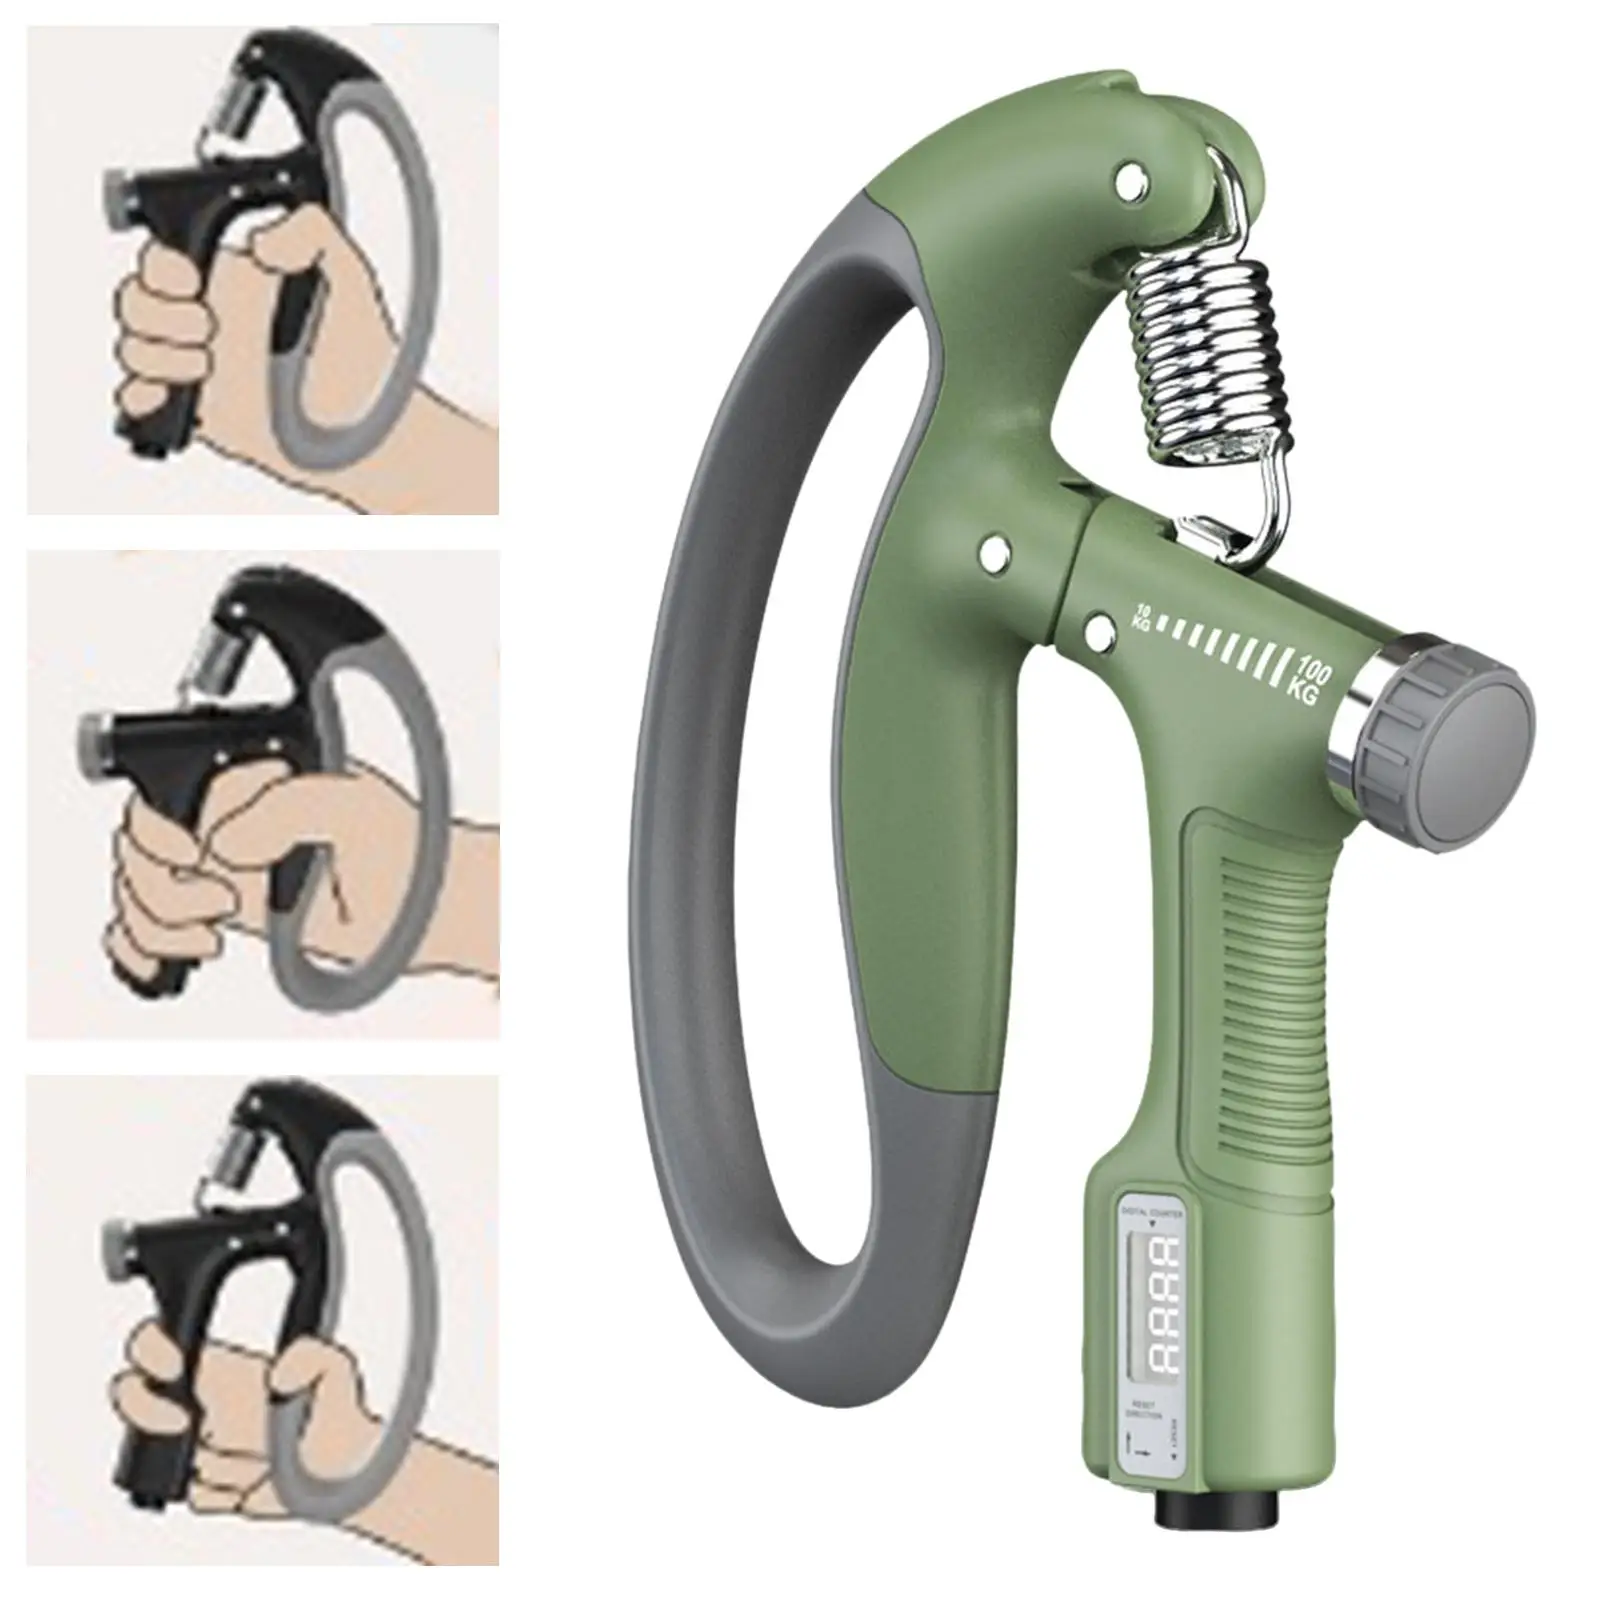 Hand Grip Strengthener Adjustable Resistance Grip with Counter